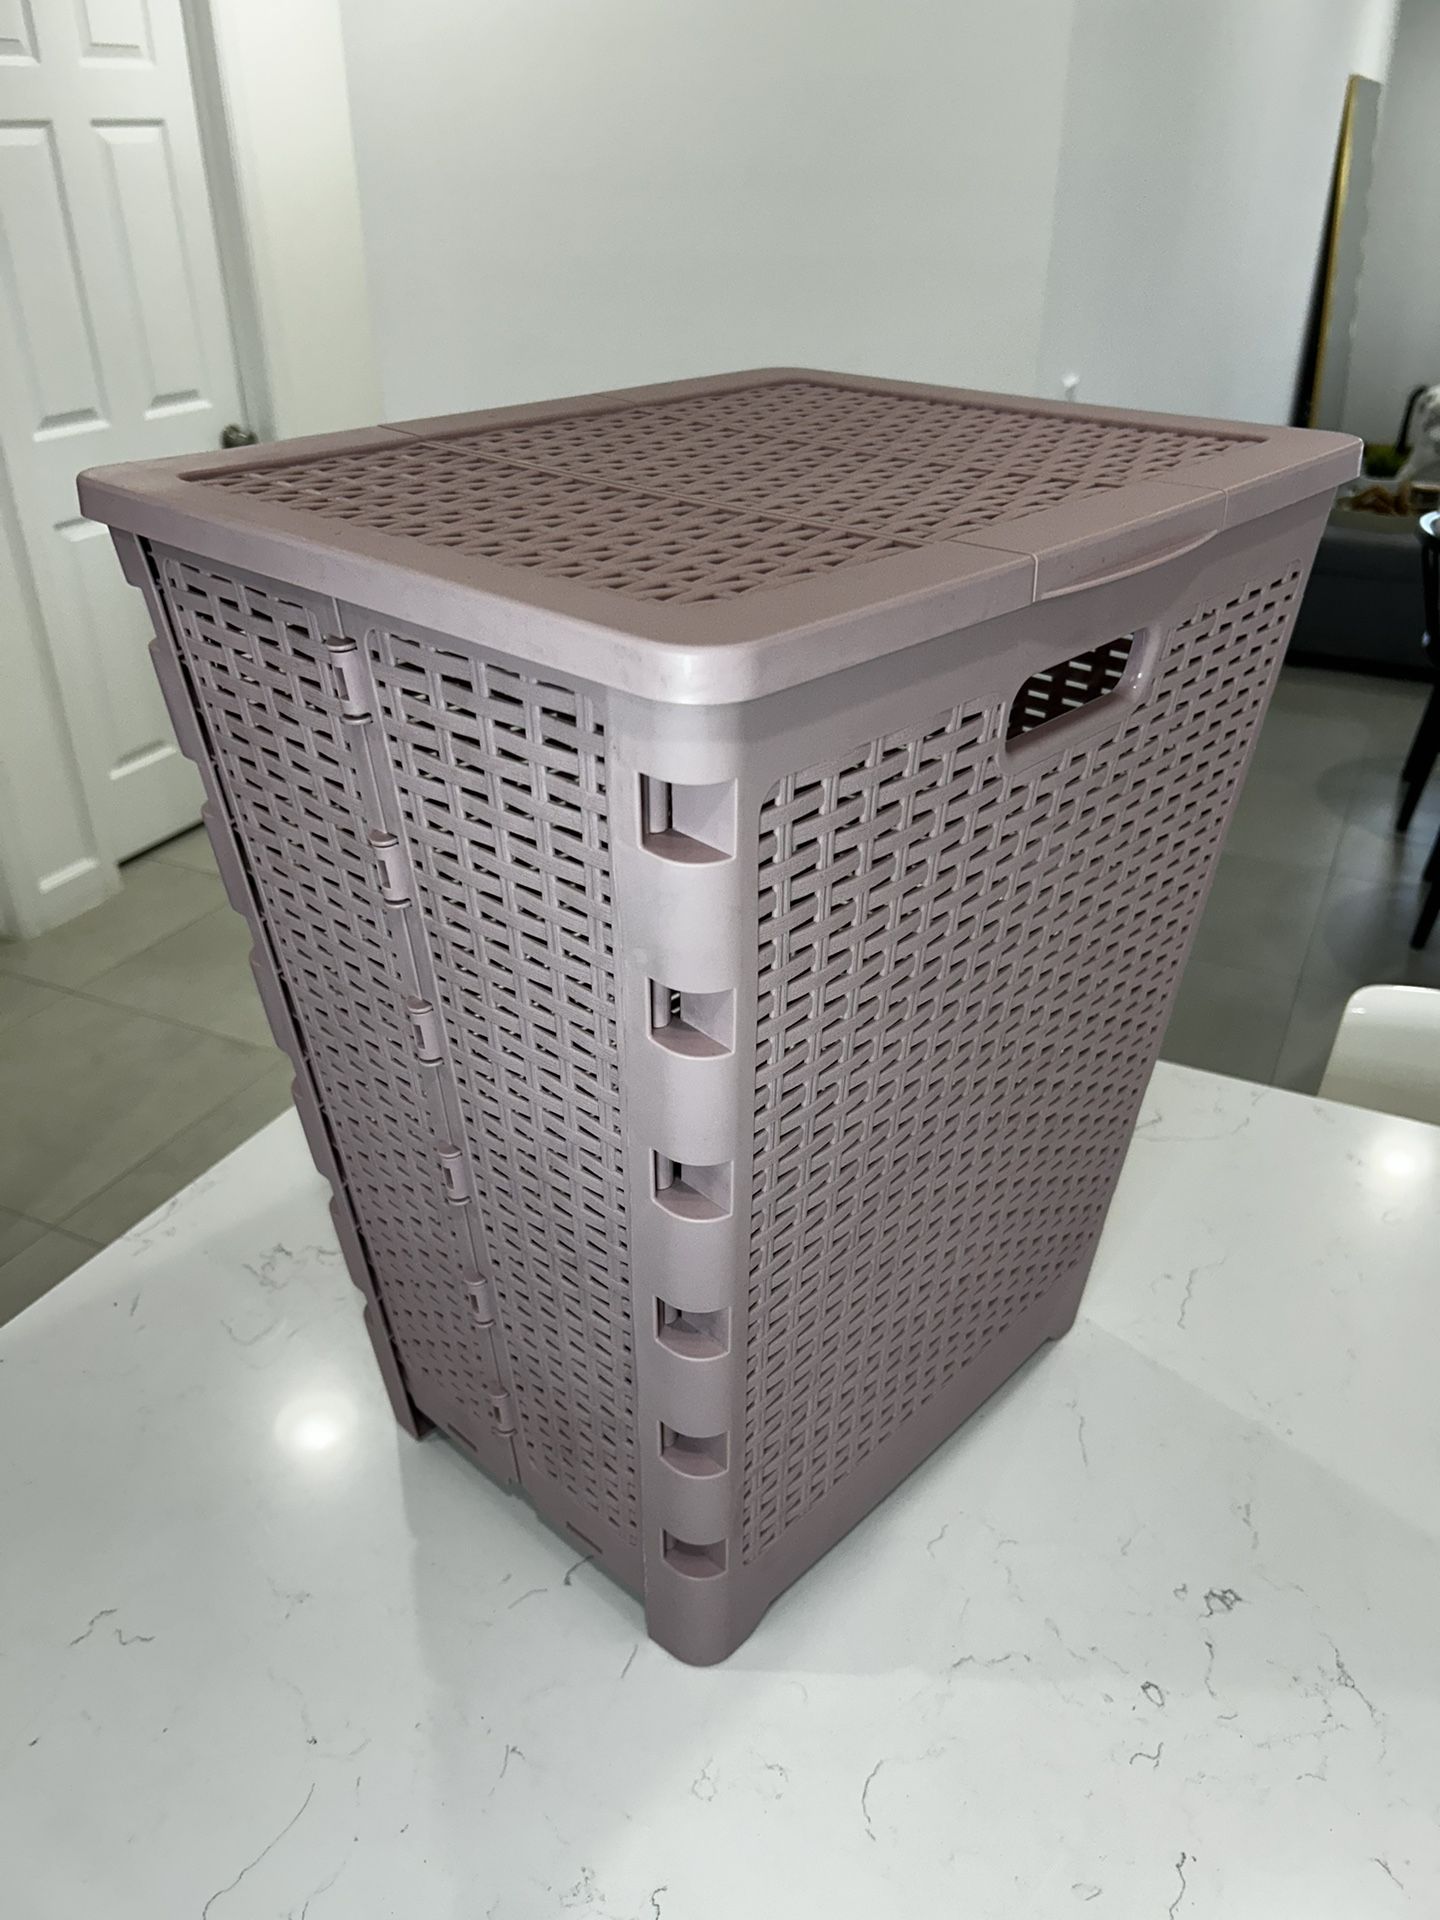 Pink 61L Ventilated Foldable Laundry Hamper Handles Hinged Lid